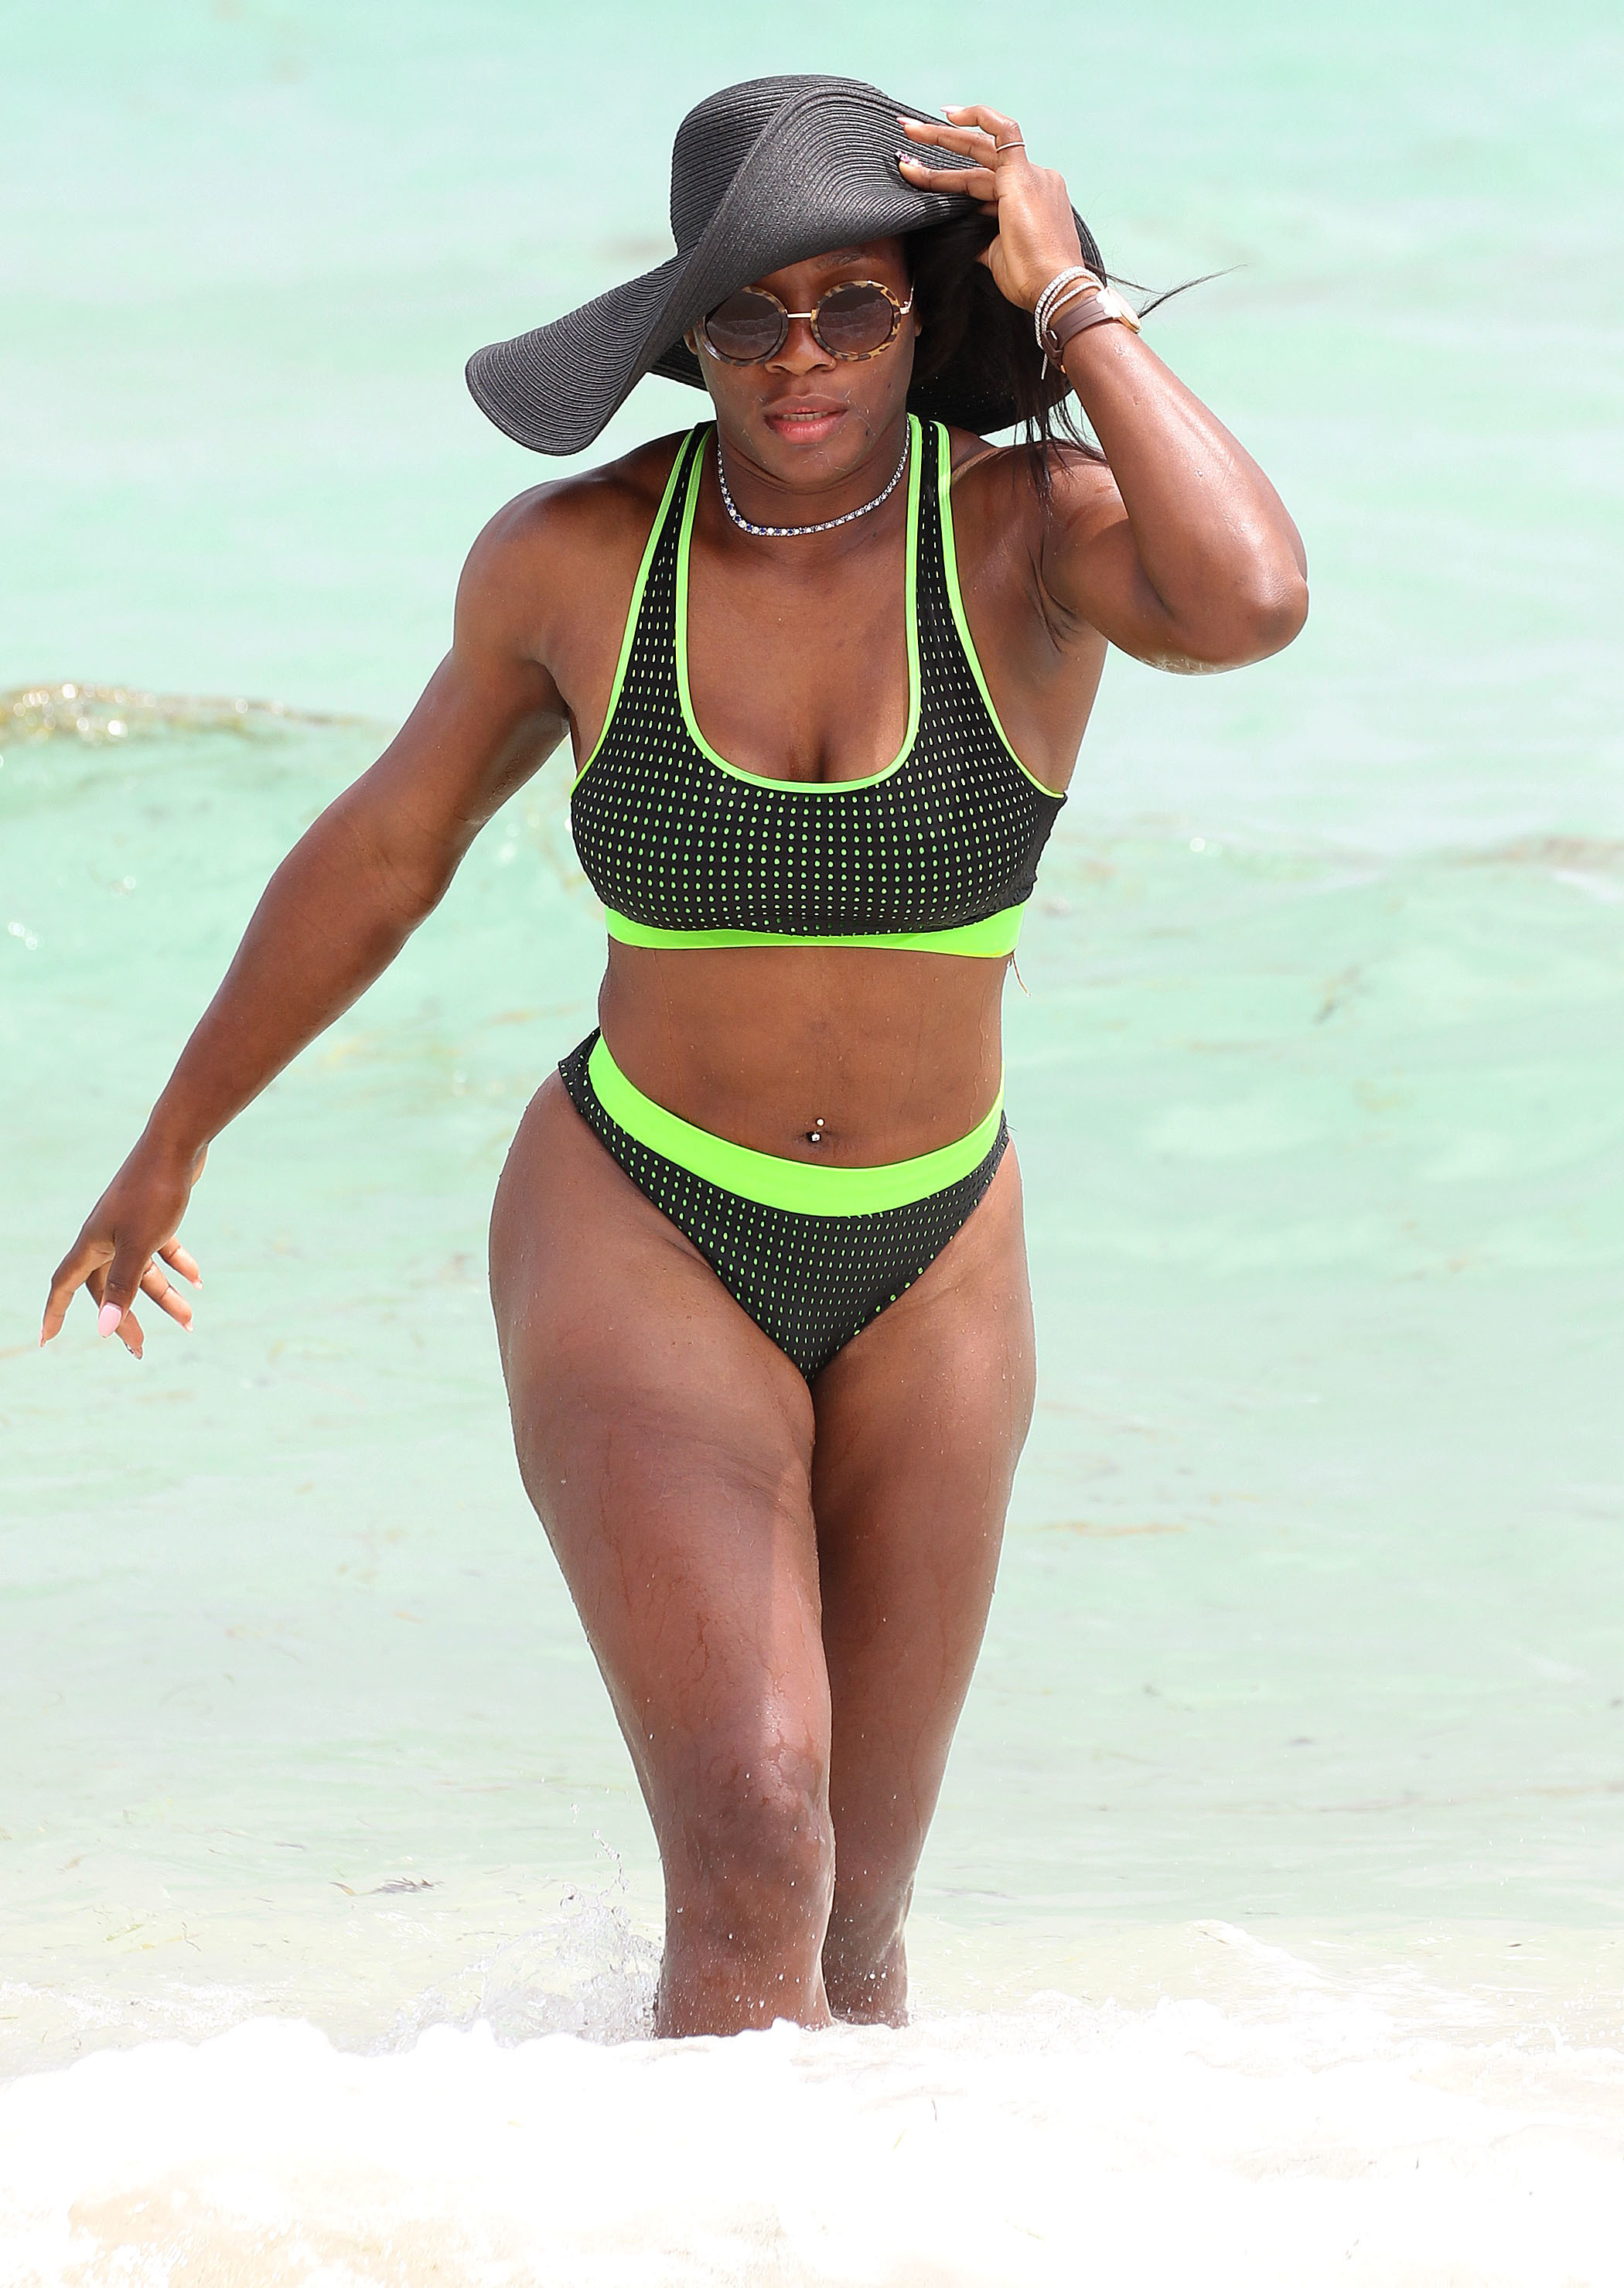 Serena Williams - best bikini moments | Gallery | Wonderwall.com